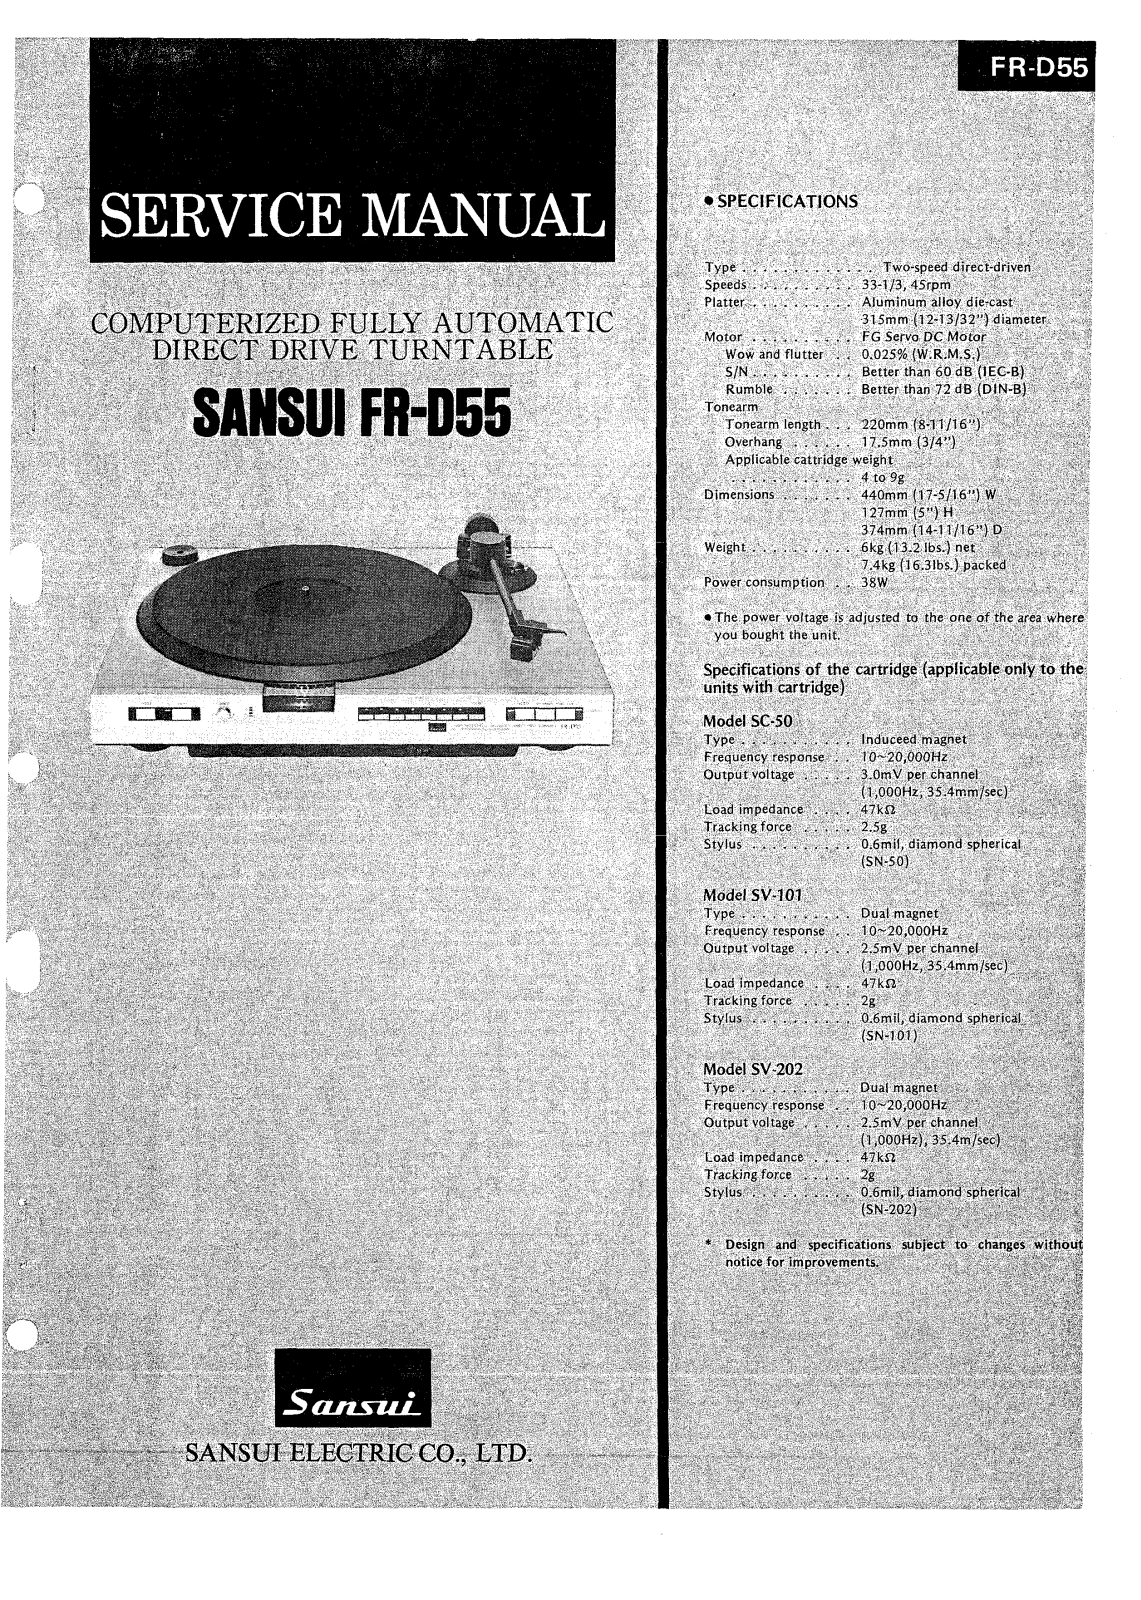 Sansui FRD-55 Service manual